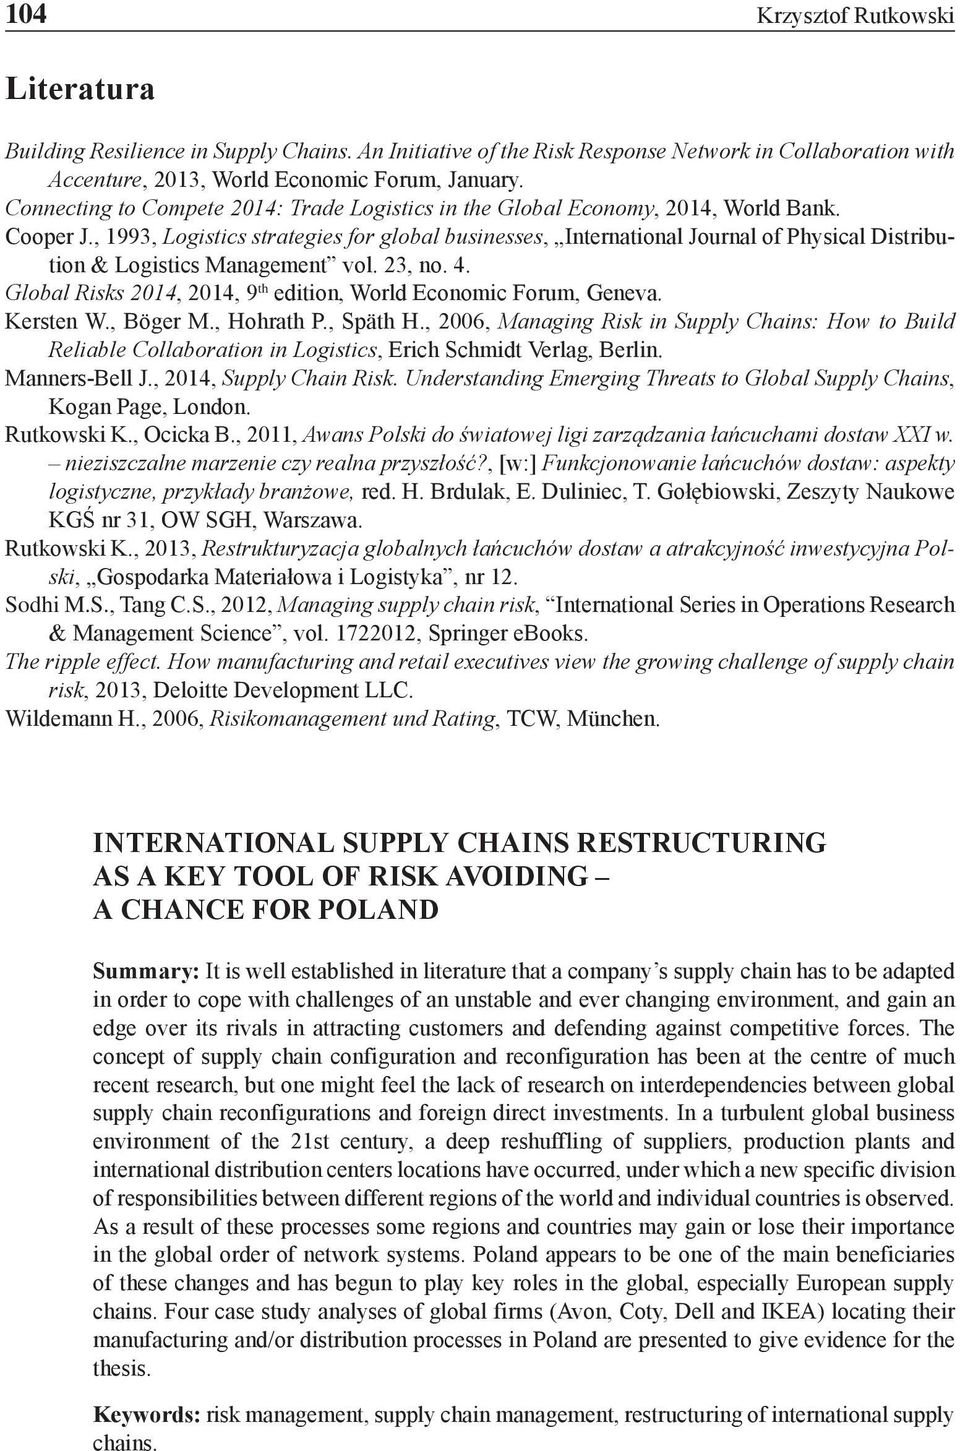 , 1993, Logistics strategies for global businesses, International Journal of Physical Distribution & Logistics Management vol. 23, no. 4.